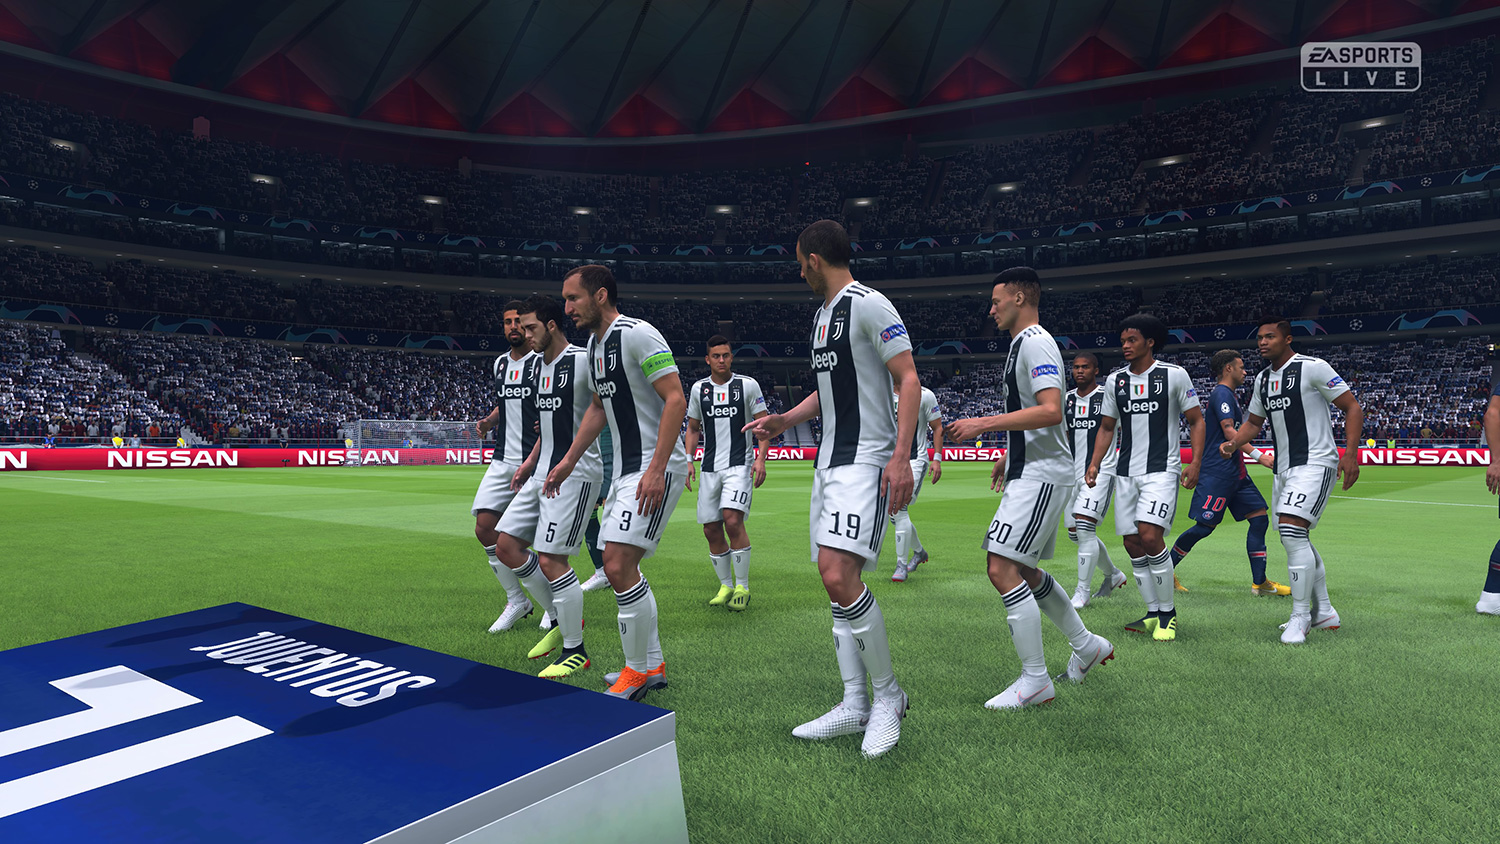 🔴▻ FIFA 19 ⚽ Champions League #1 com a Juventus! 